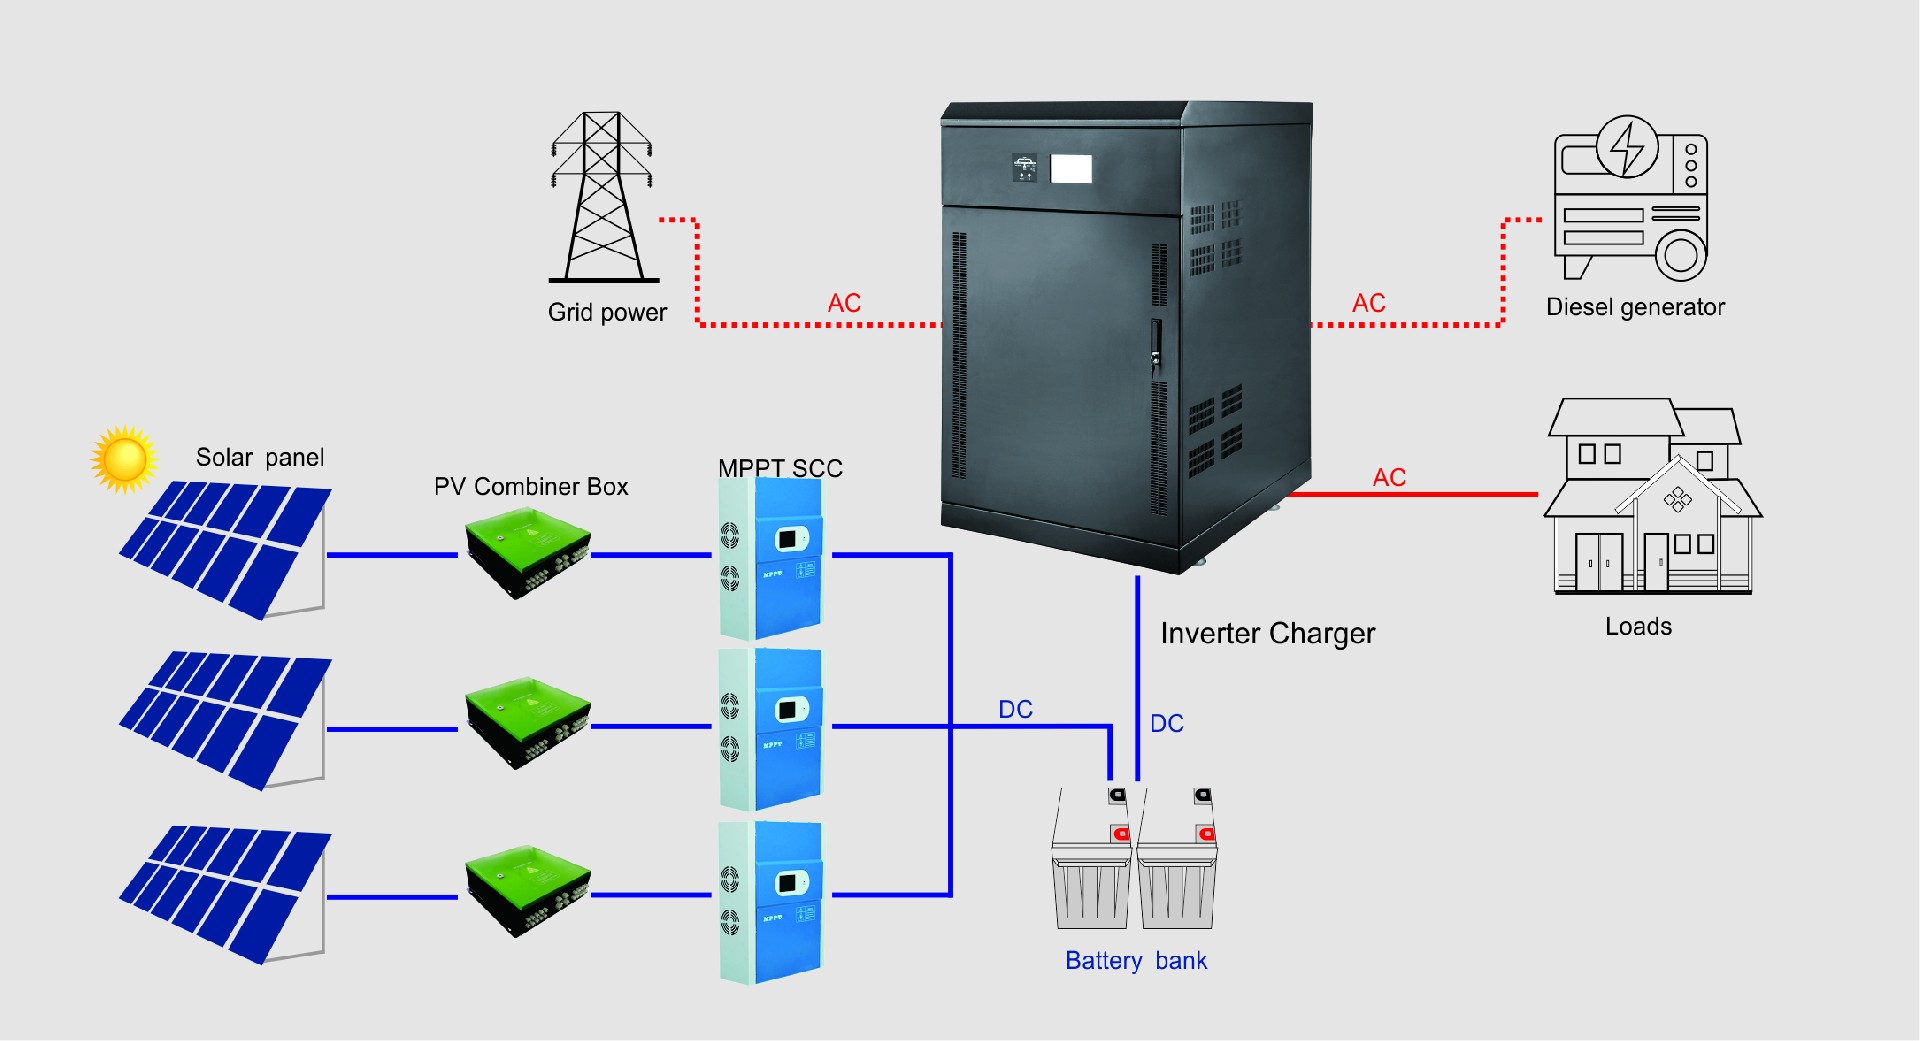 Delta series wiring diagram.jpg